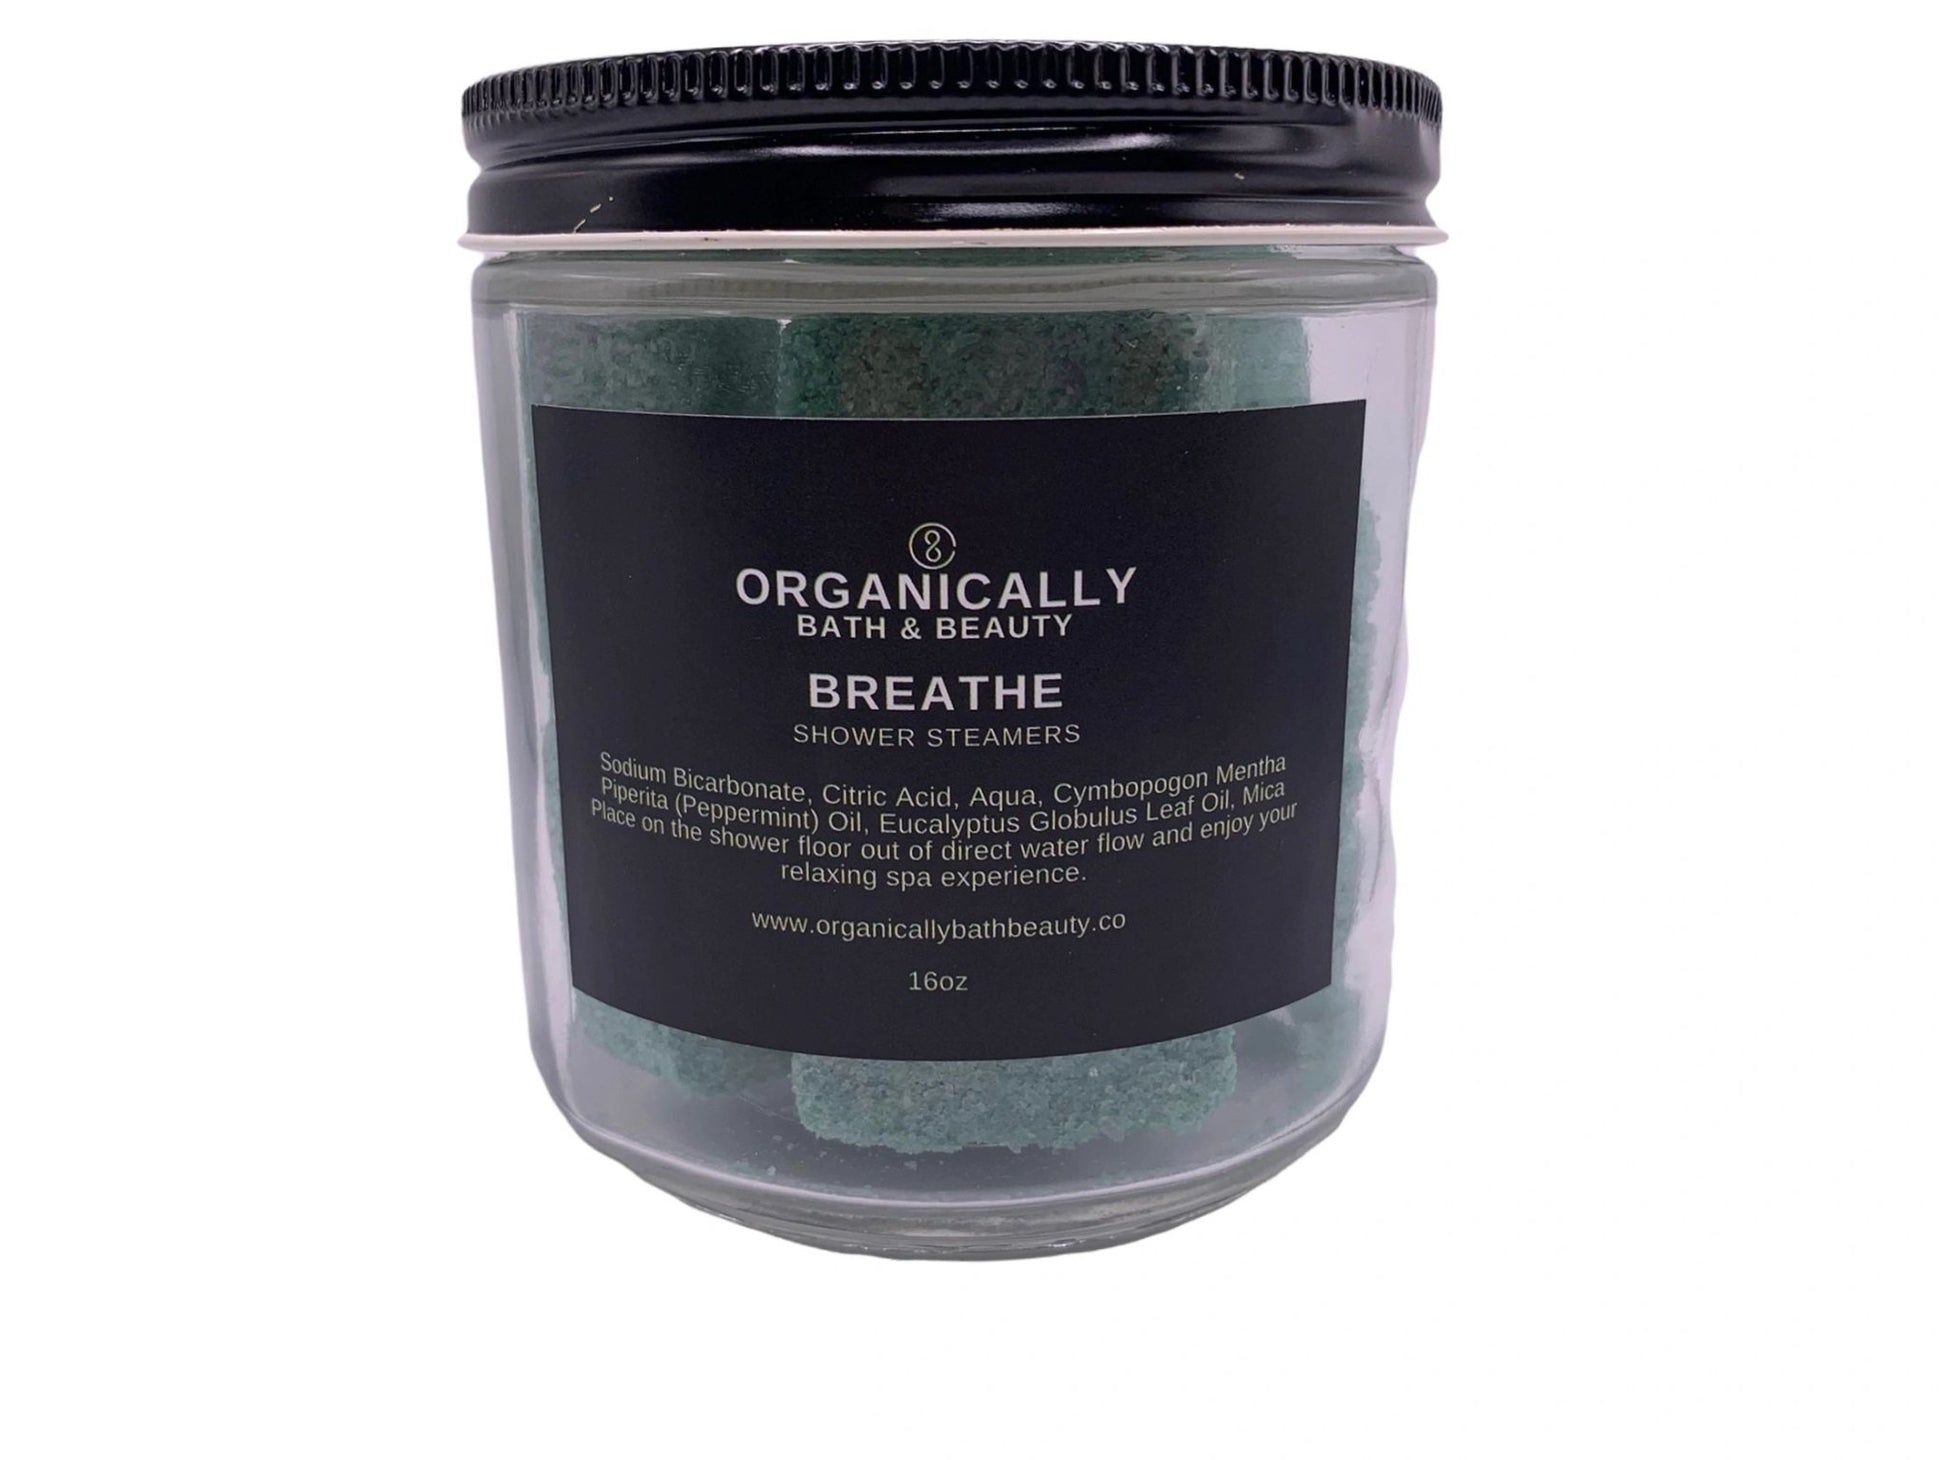 Breathe Shower Steamers - Organically Bath & Beauty